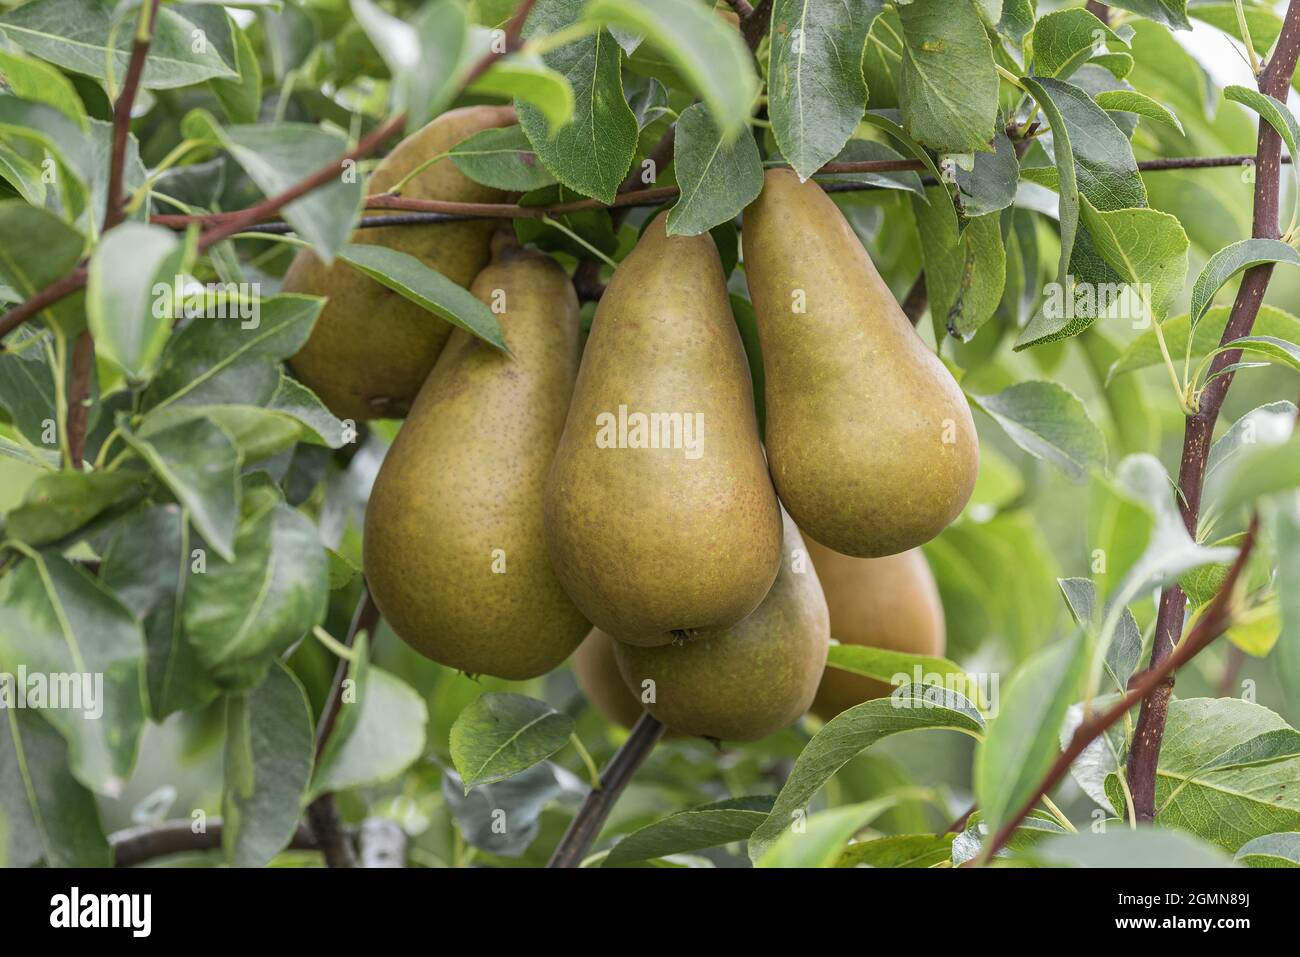 Common pear (Pyrus communis 'Sommerbutterbirne', Pyrus communis Sommerbutterbirne), pear on a tree, cultivar Sommerbutterbirne Stock Photo